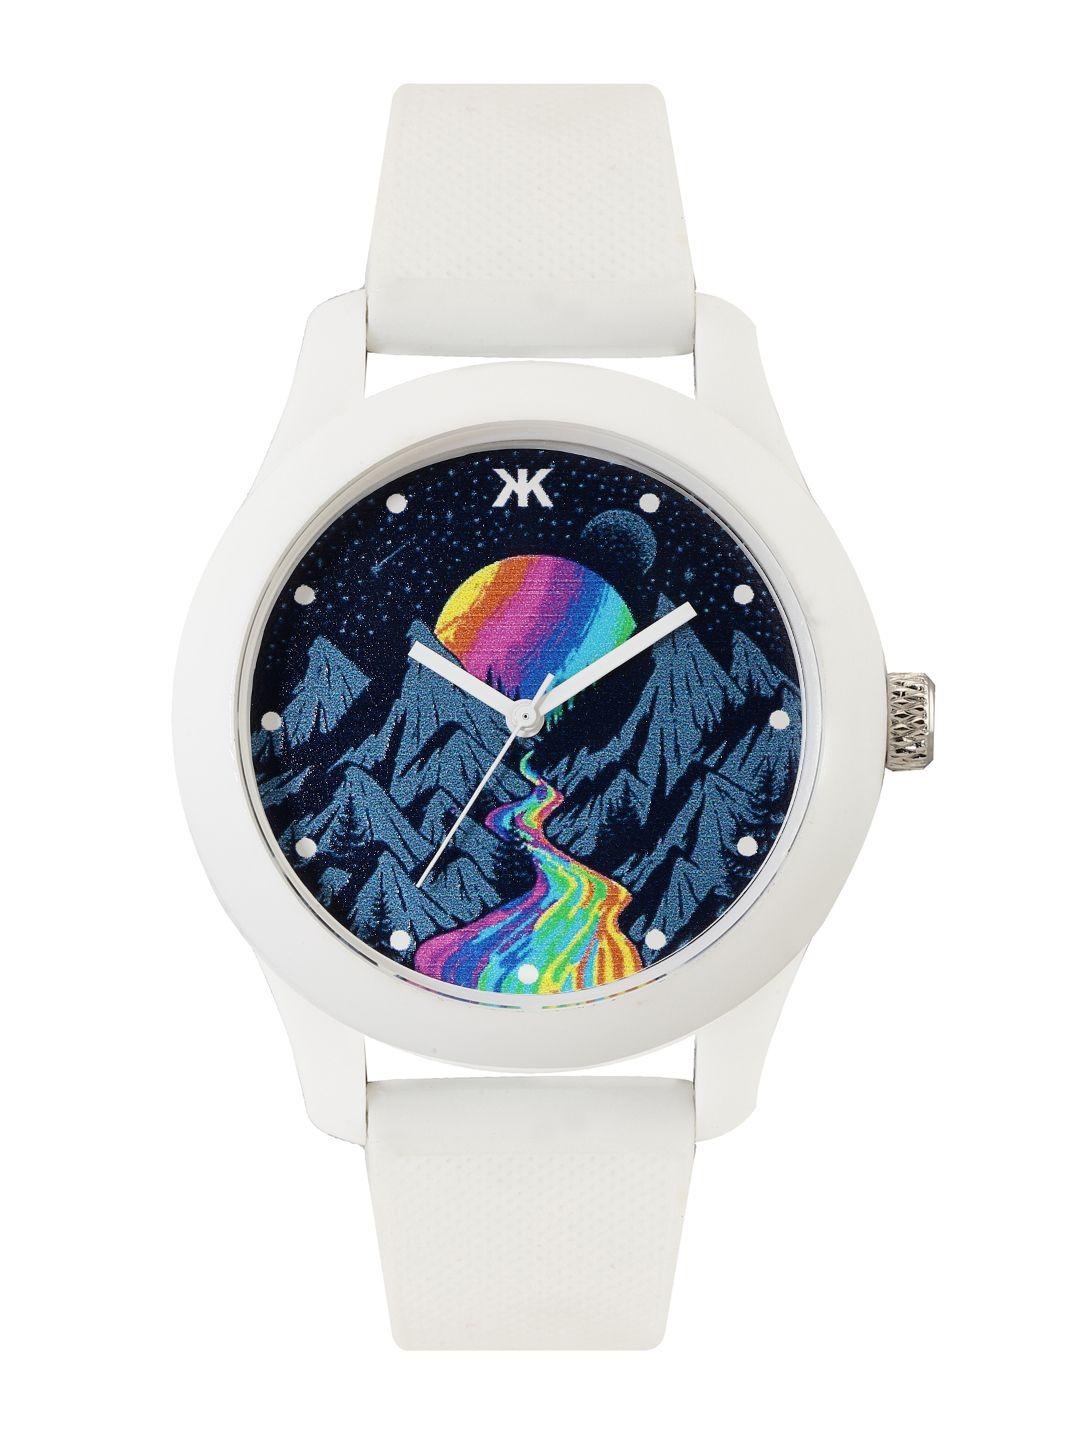 kook n keech unisex multicoloured printed analogue watch knk225g